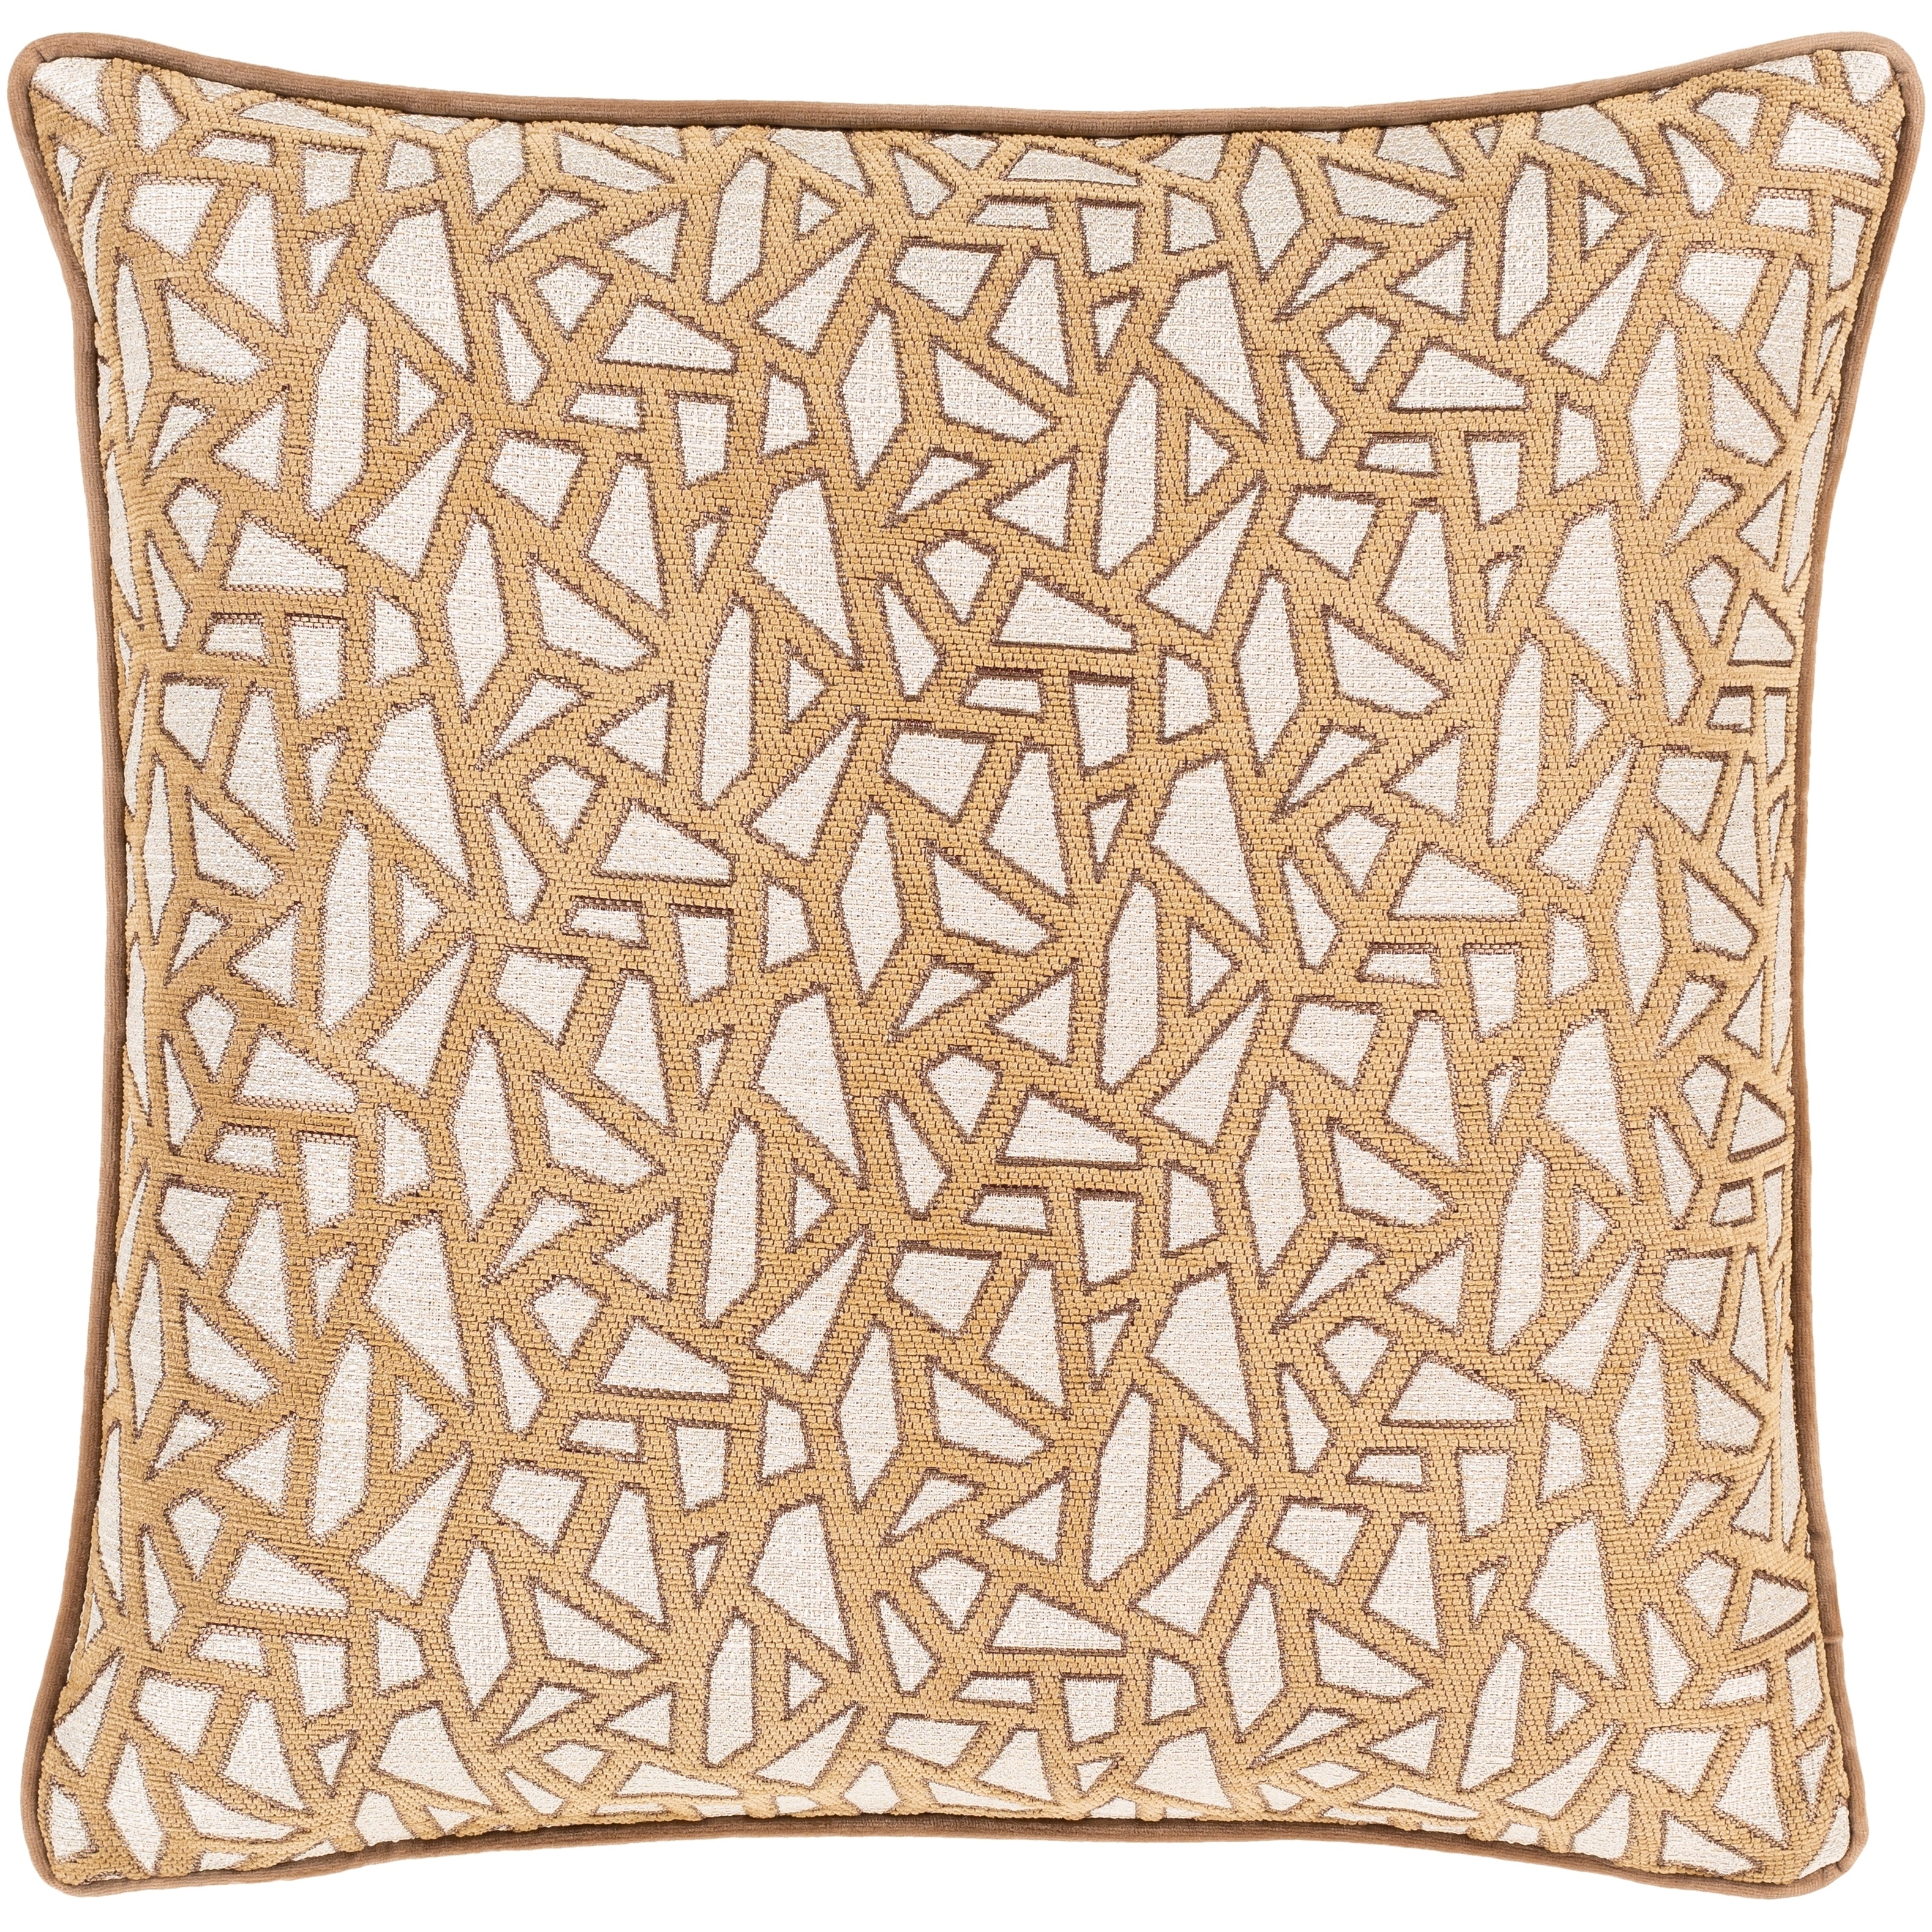 Artistic Weavers Brier Jacquard Mosaic 22-inch Throw Pillow Cover - Tan